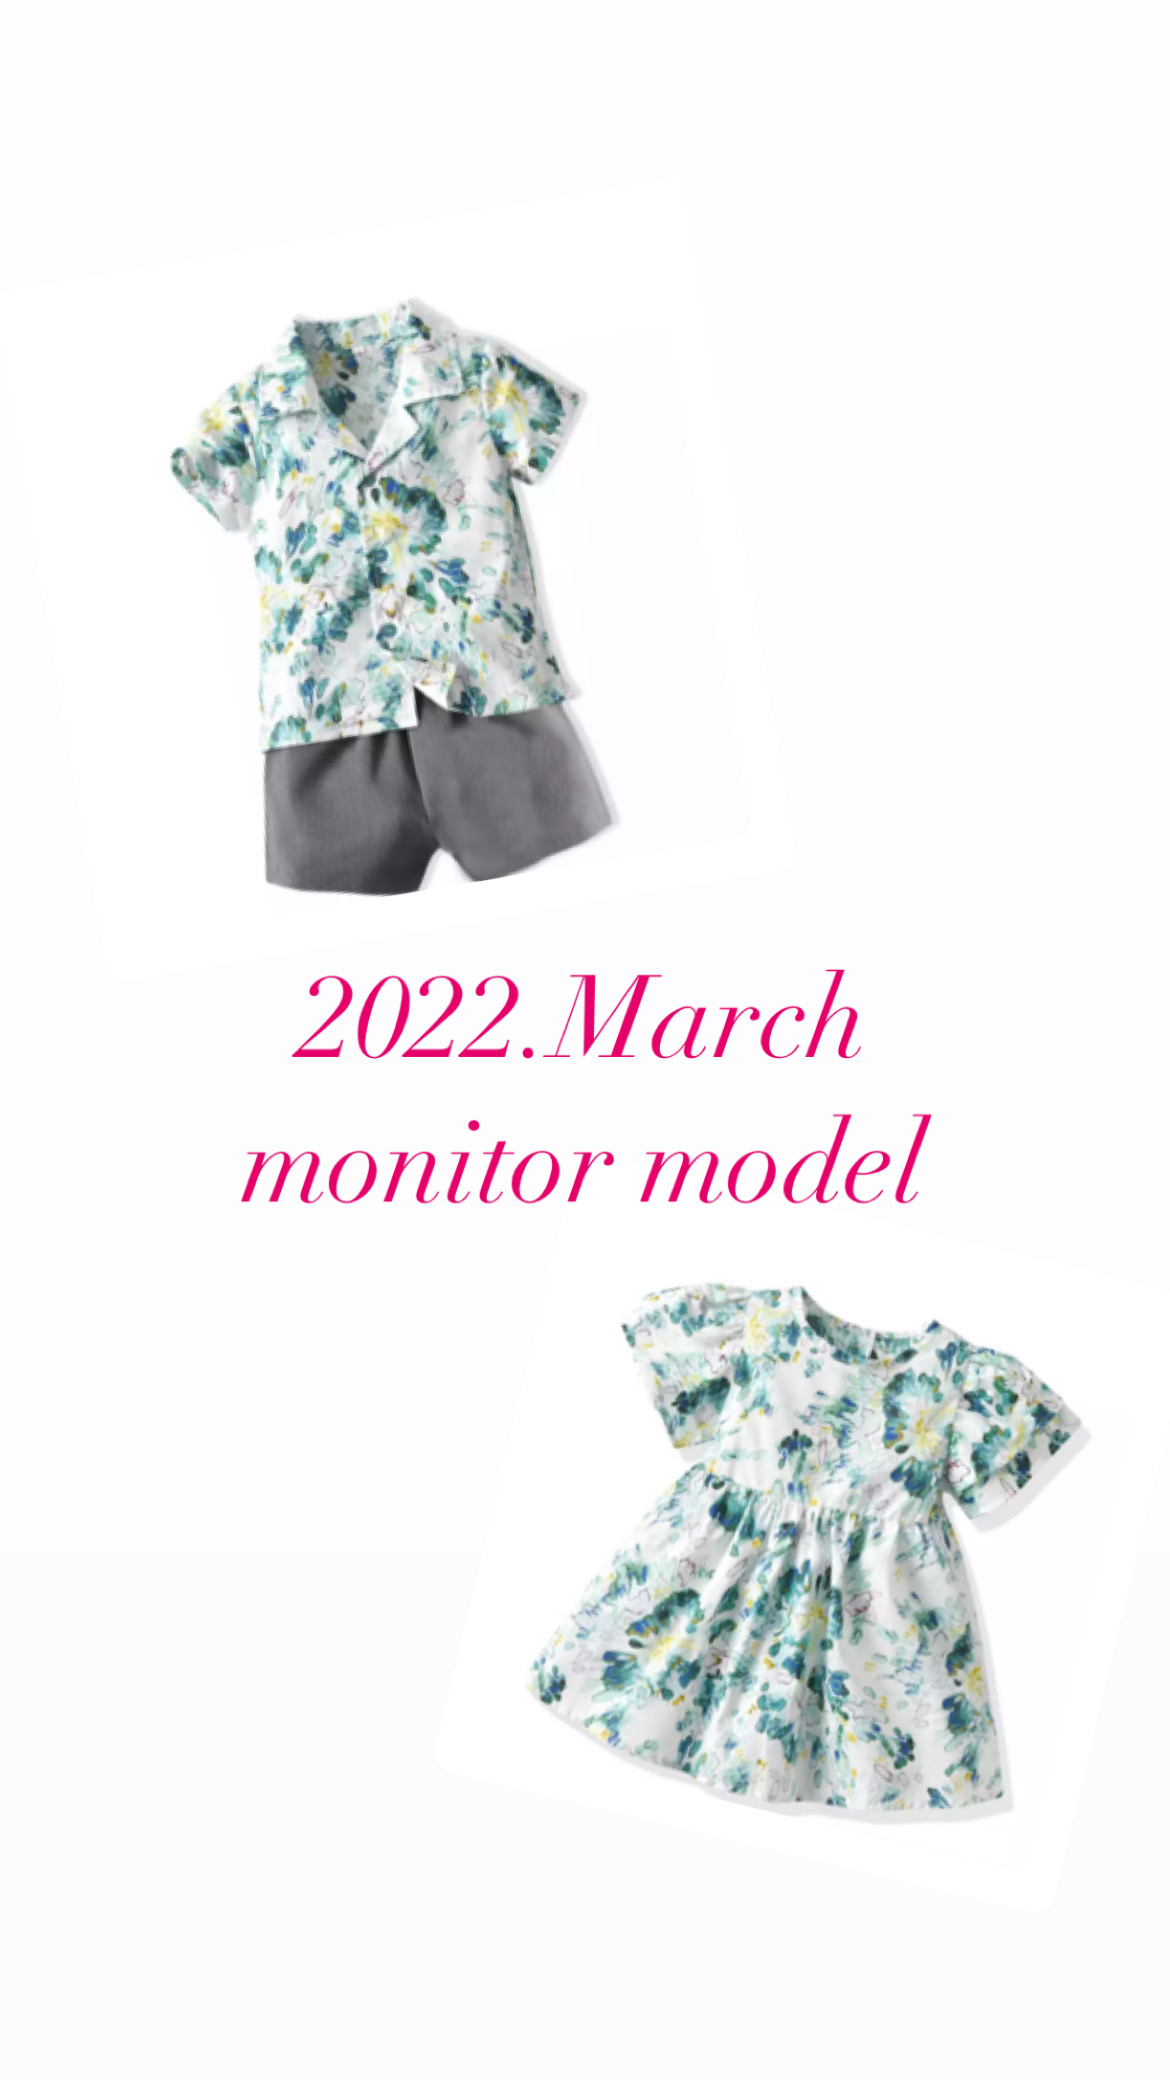 22 March monitor model